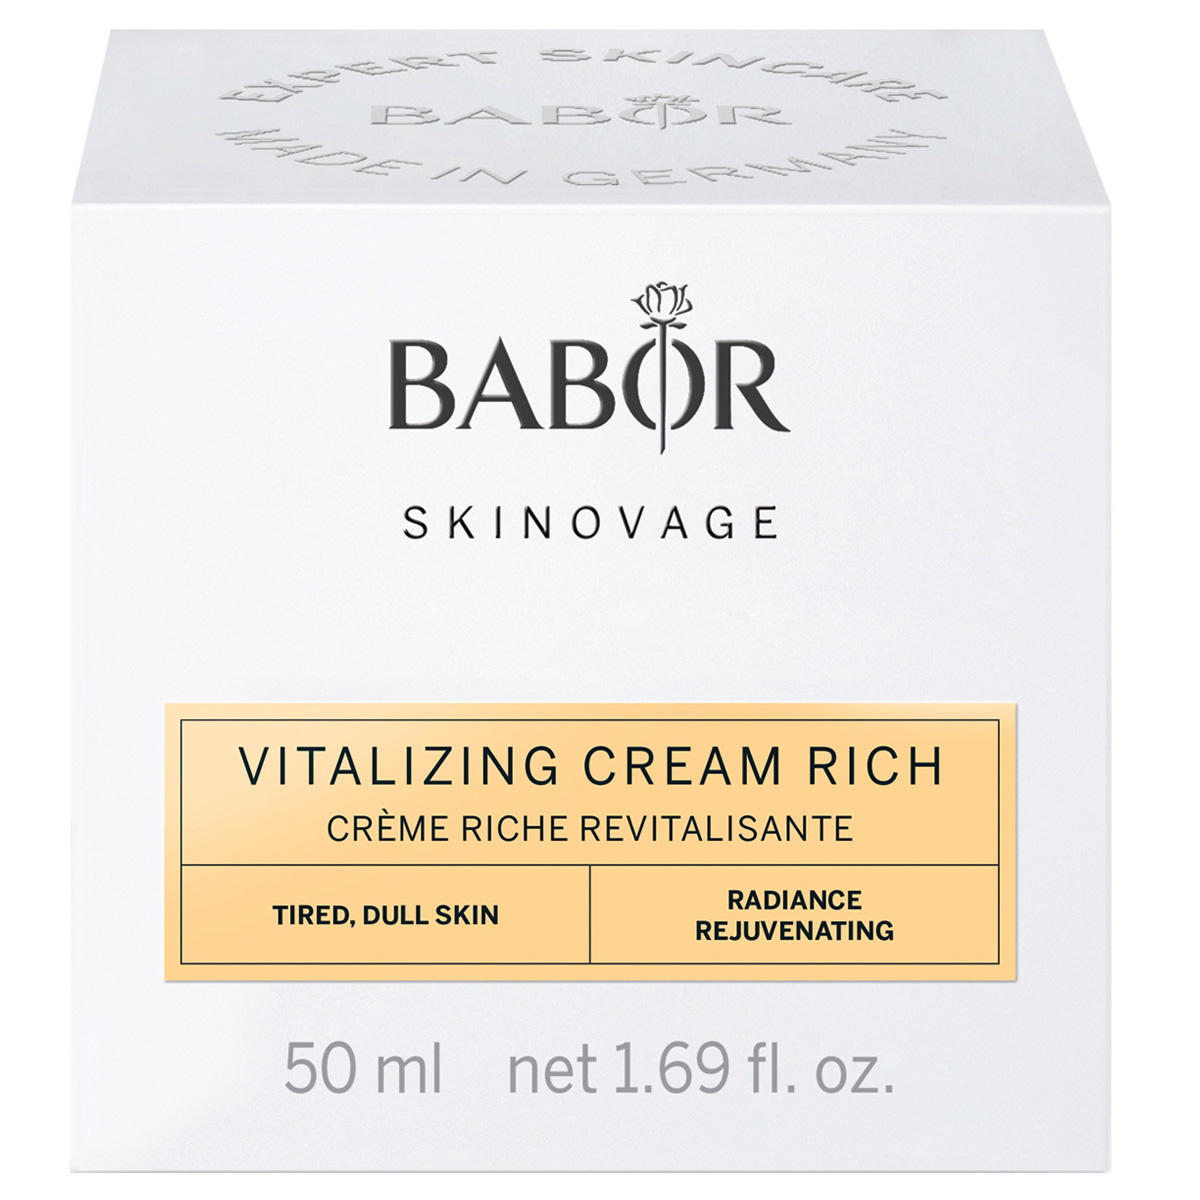 BABOR SKINOVAGE Vitalizing Cream rich 50 ml - 2